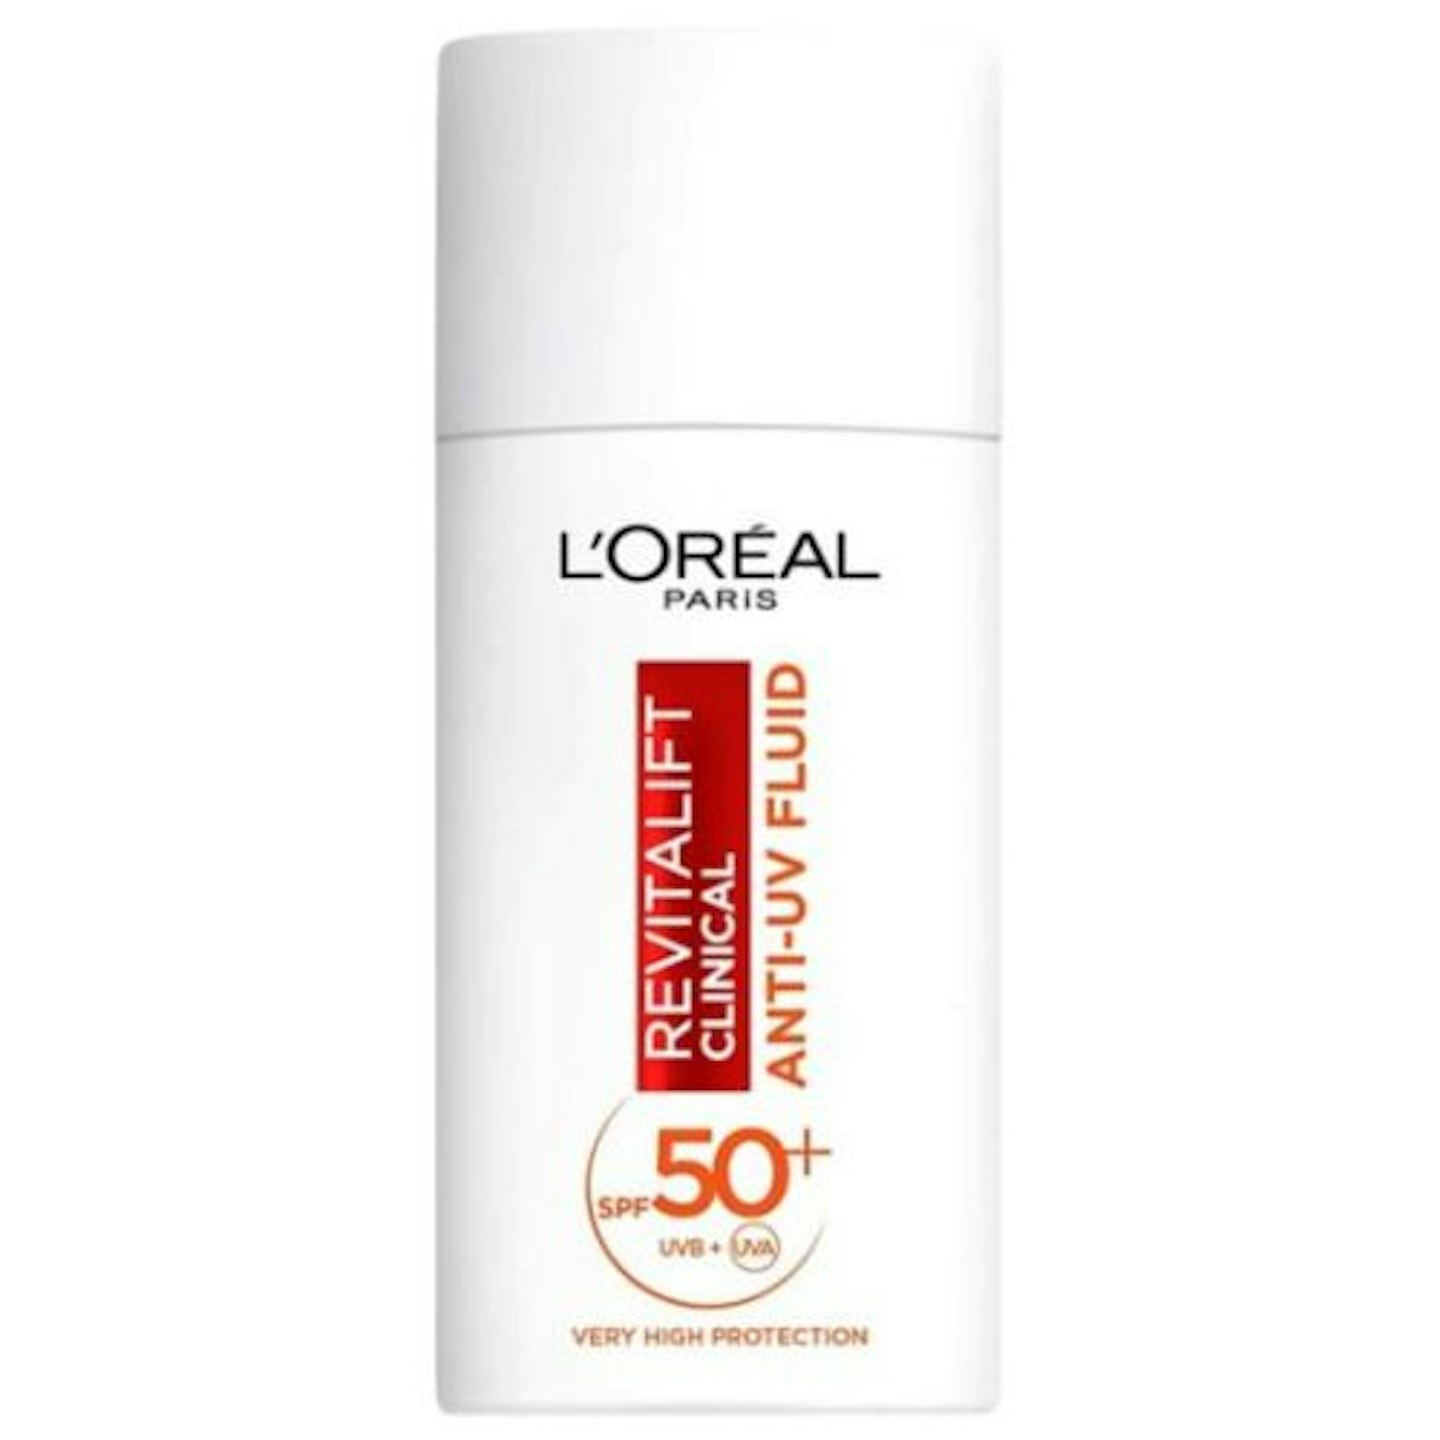 L'Oréal Paris Revitalift Clinical Vitamin C SPF 50+ Daily Anti-UV Fluid